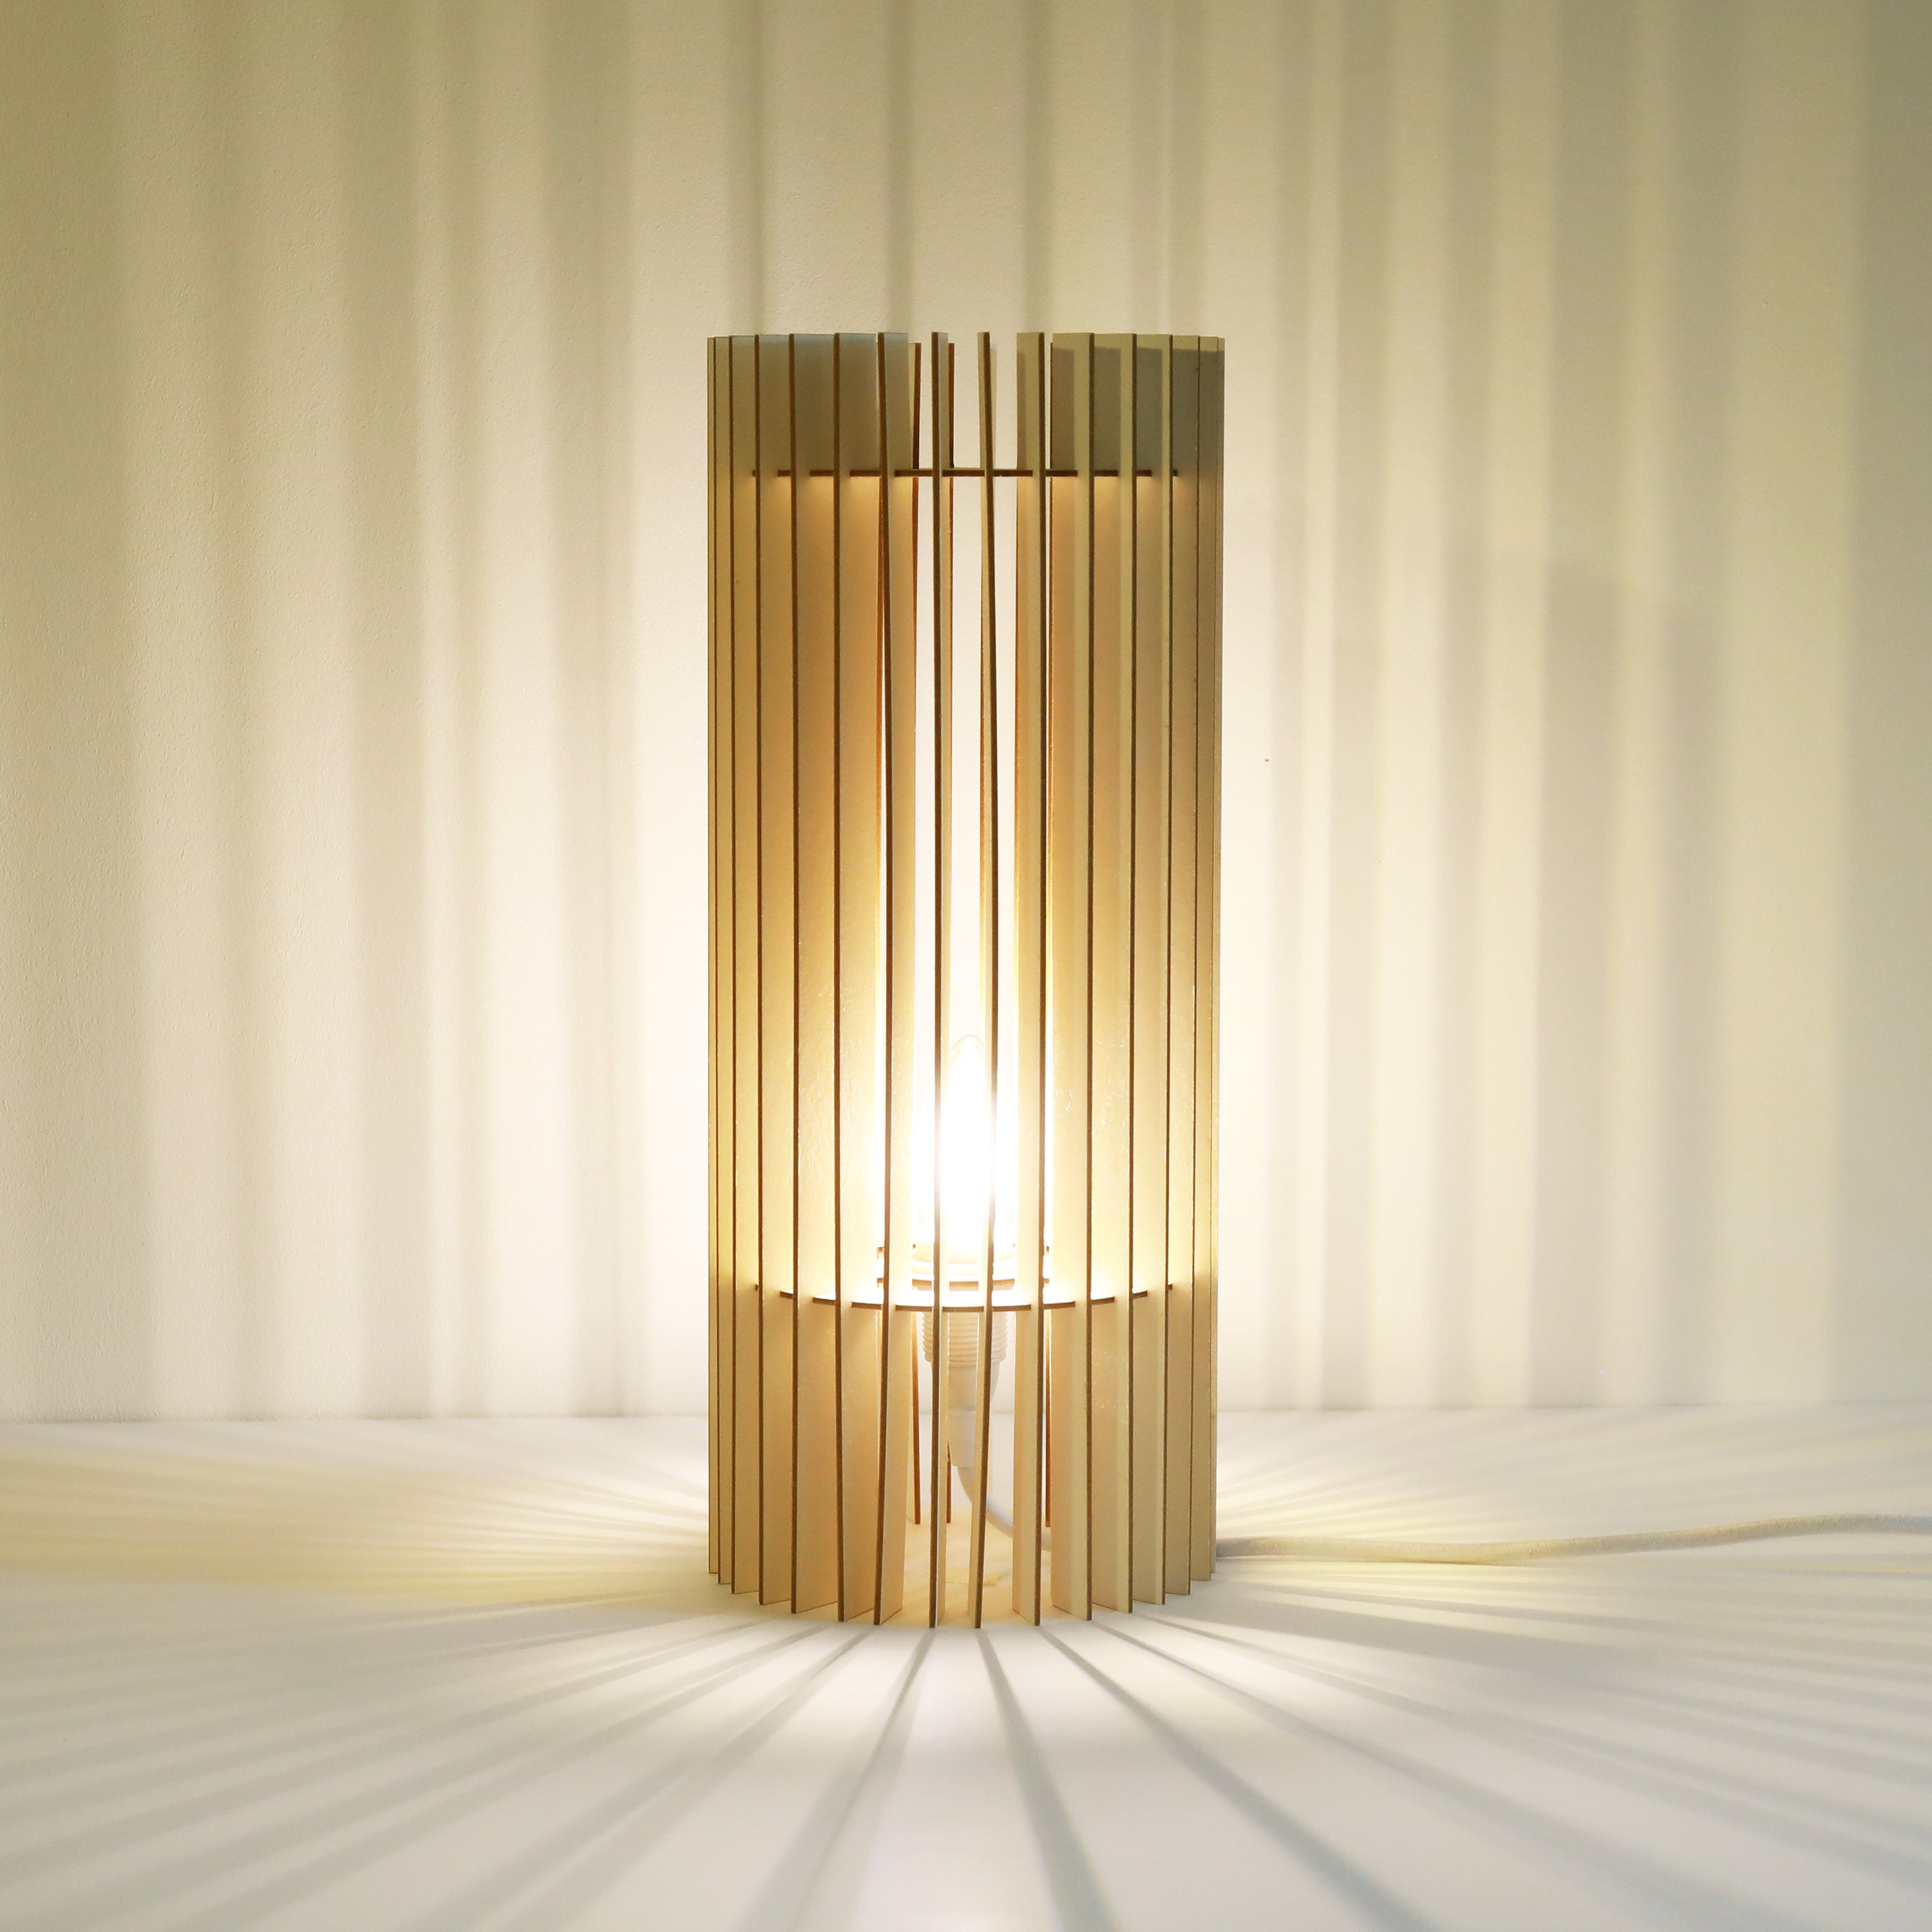 Lampe Bois Carton Scandinave à Poser Au Design Minimaliste Ecologique Cocoon Recyclé Kido Sasaella